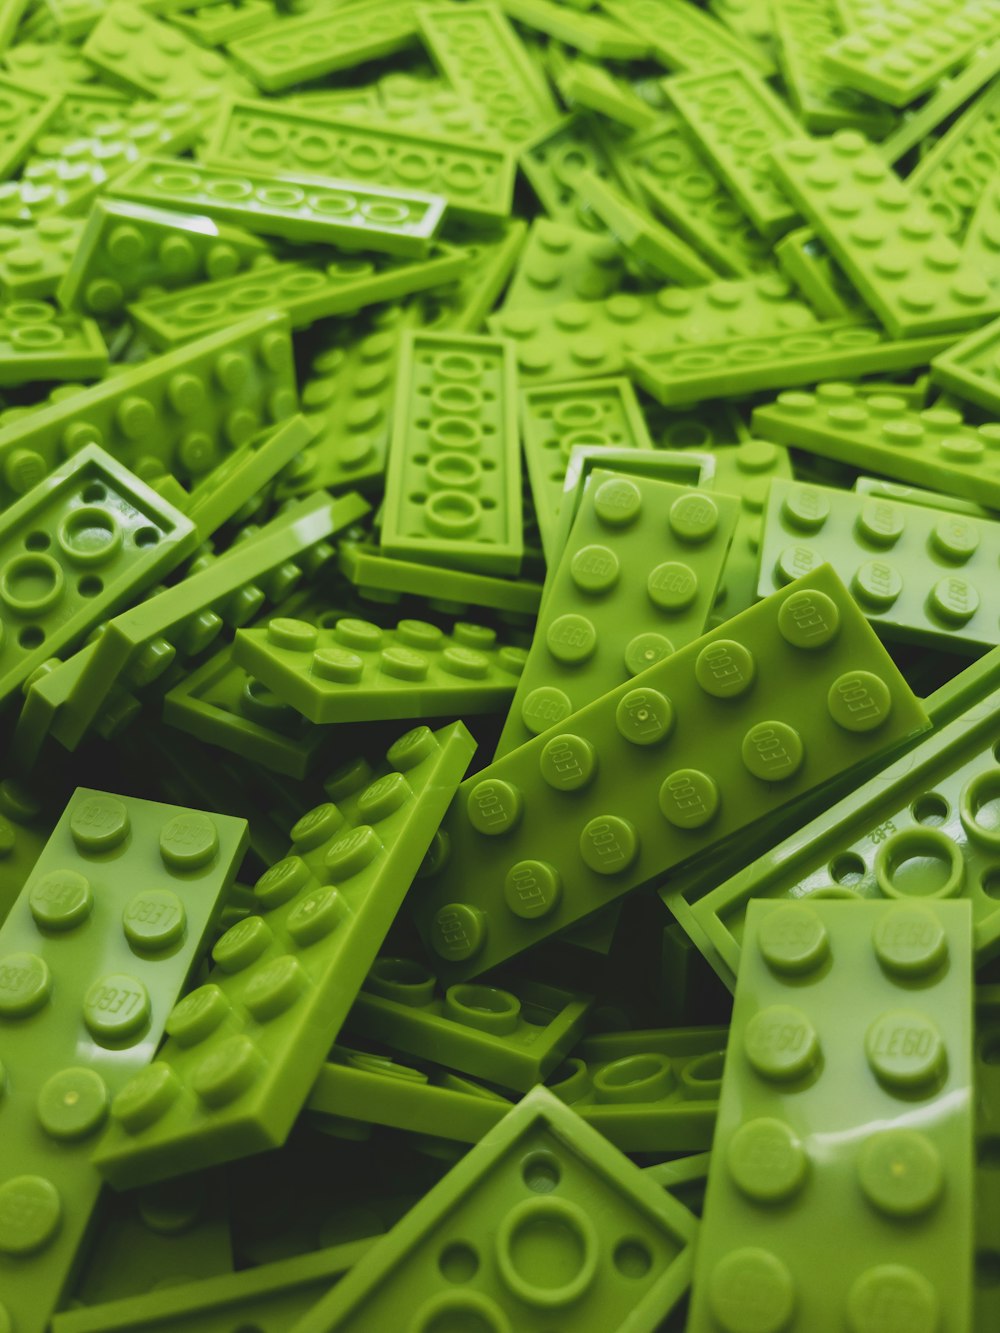 lote de bloques de Lego verde